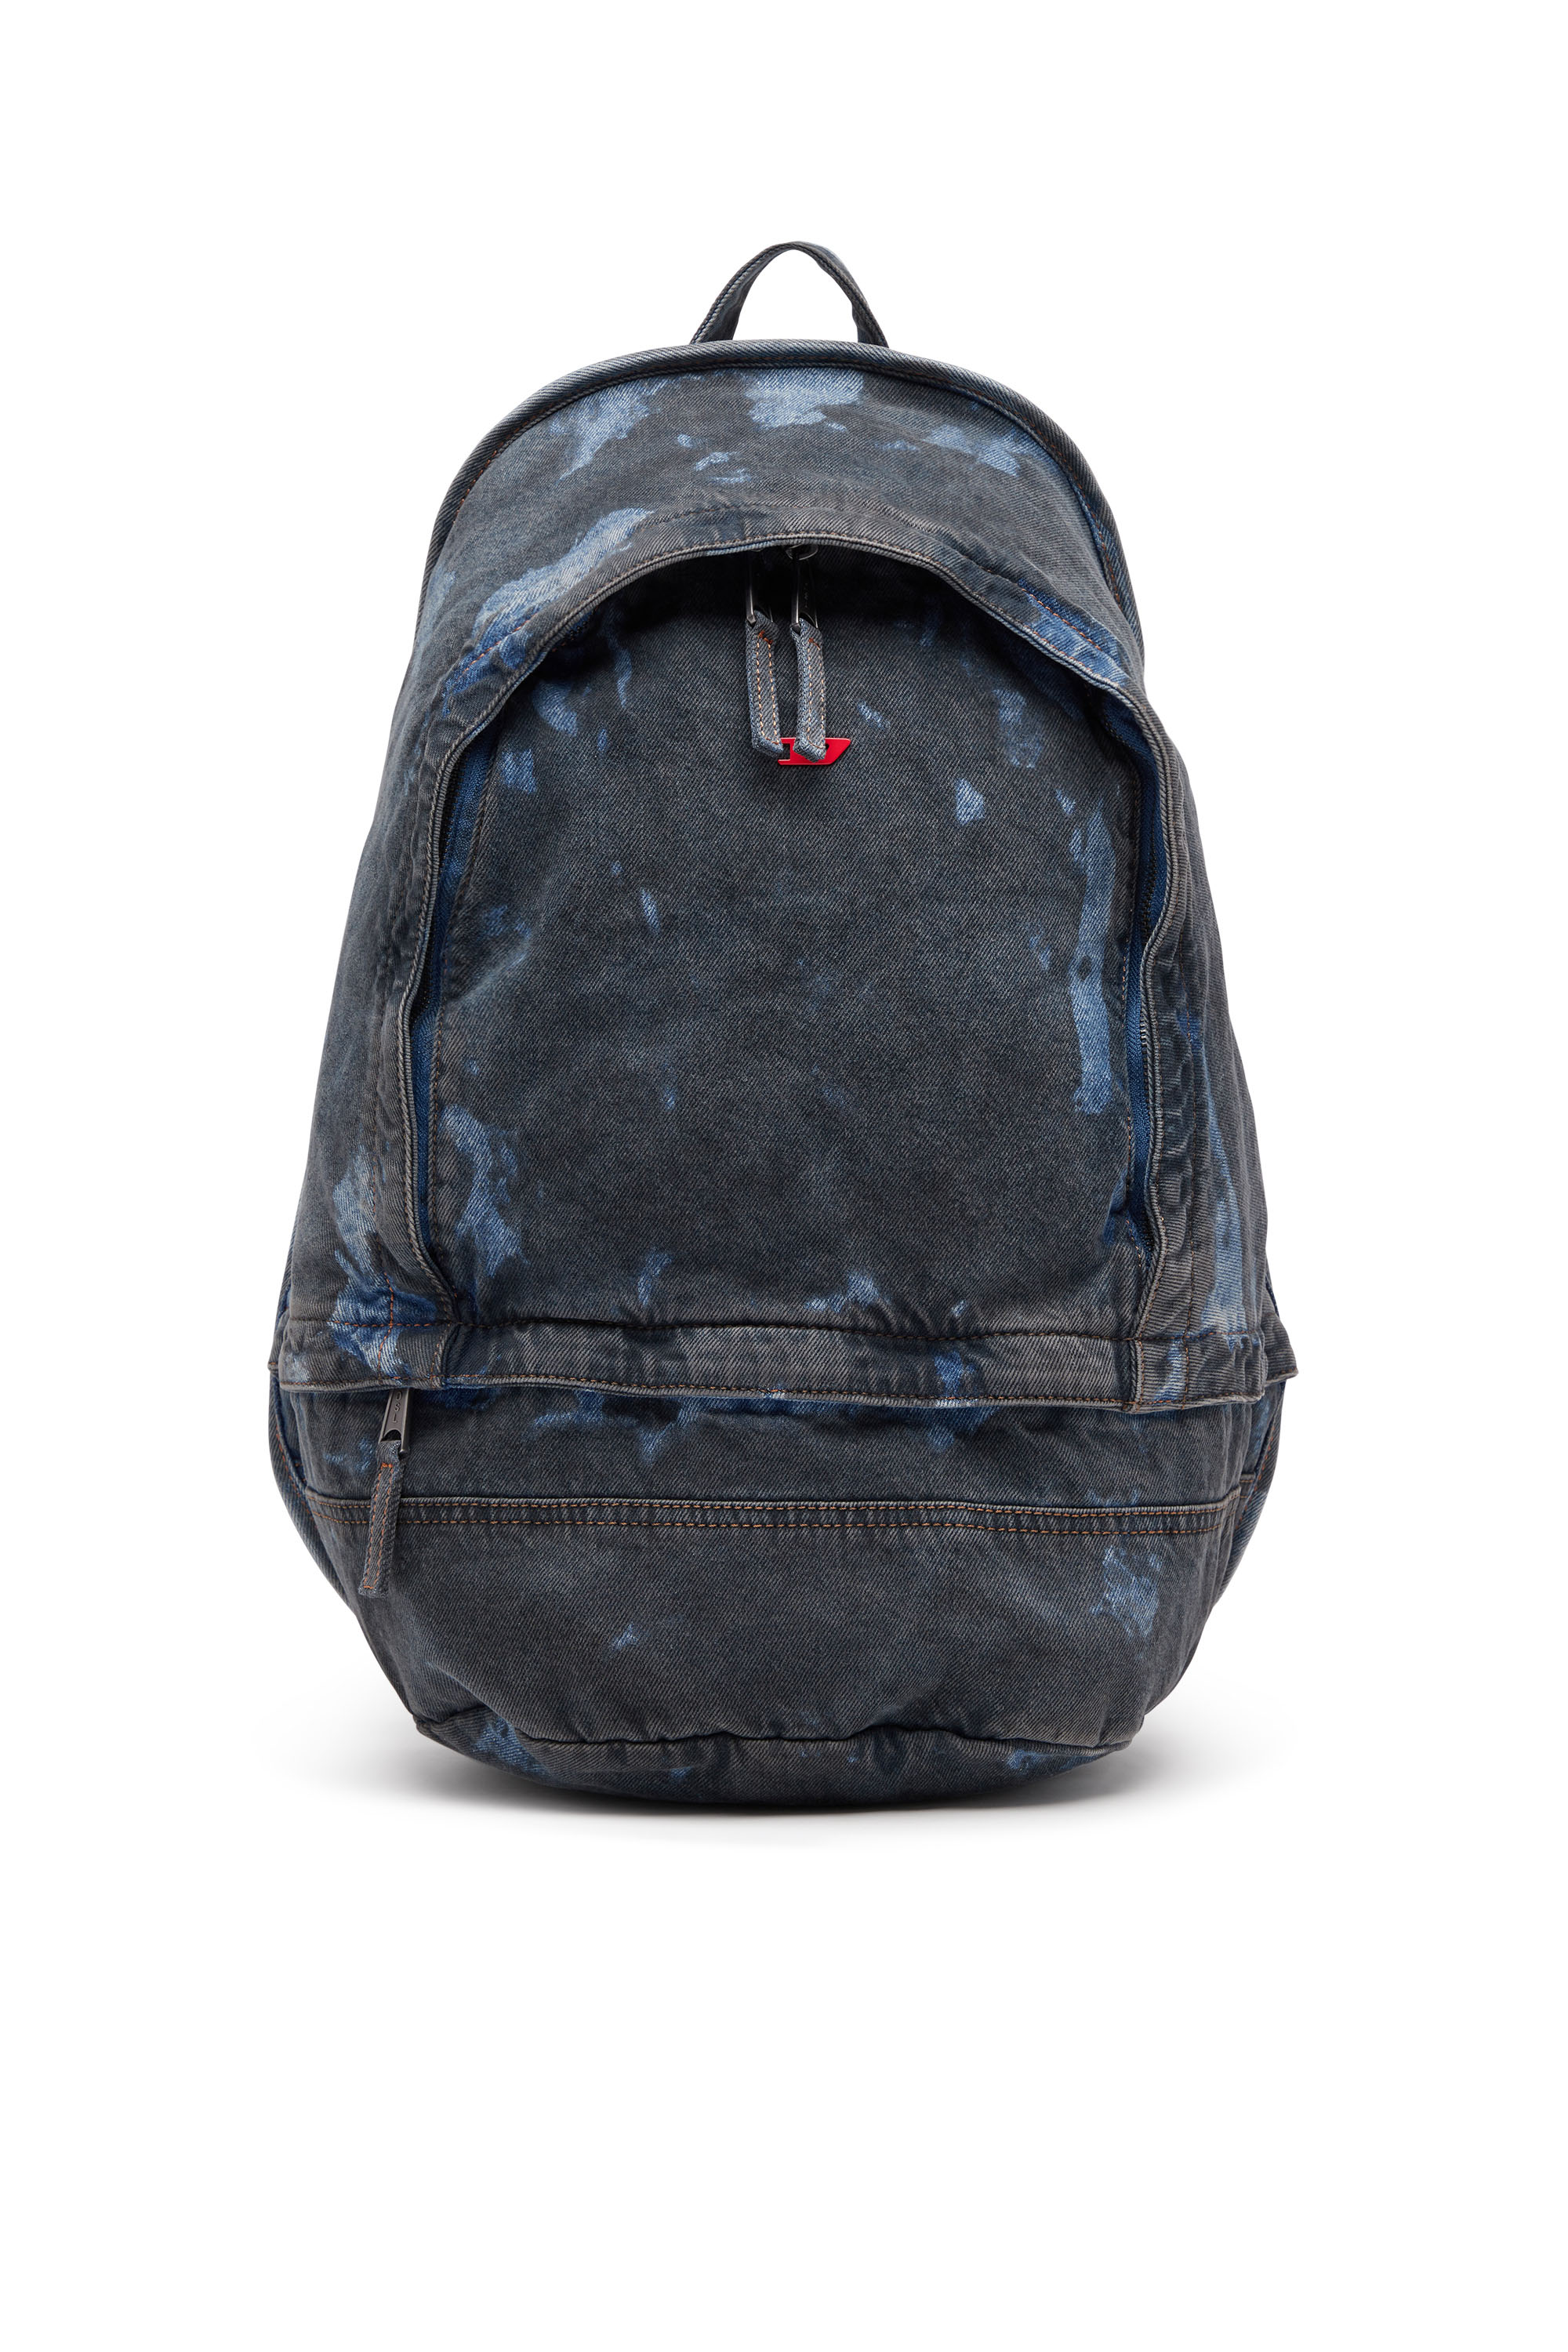 Rave-Backpack in coated denim